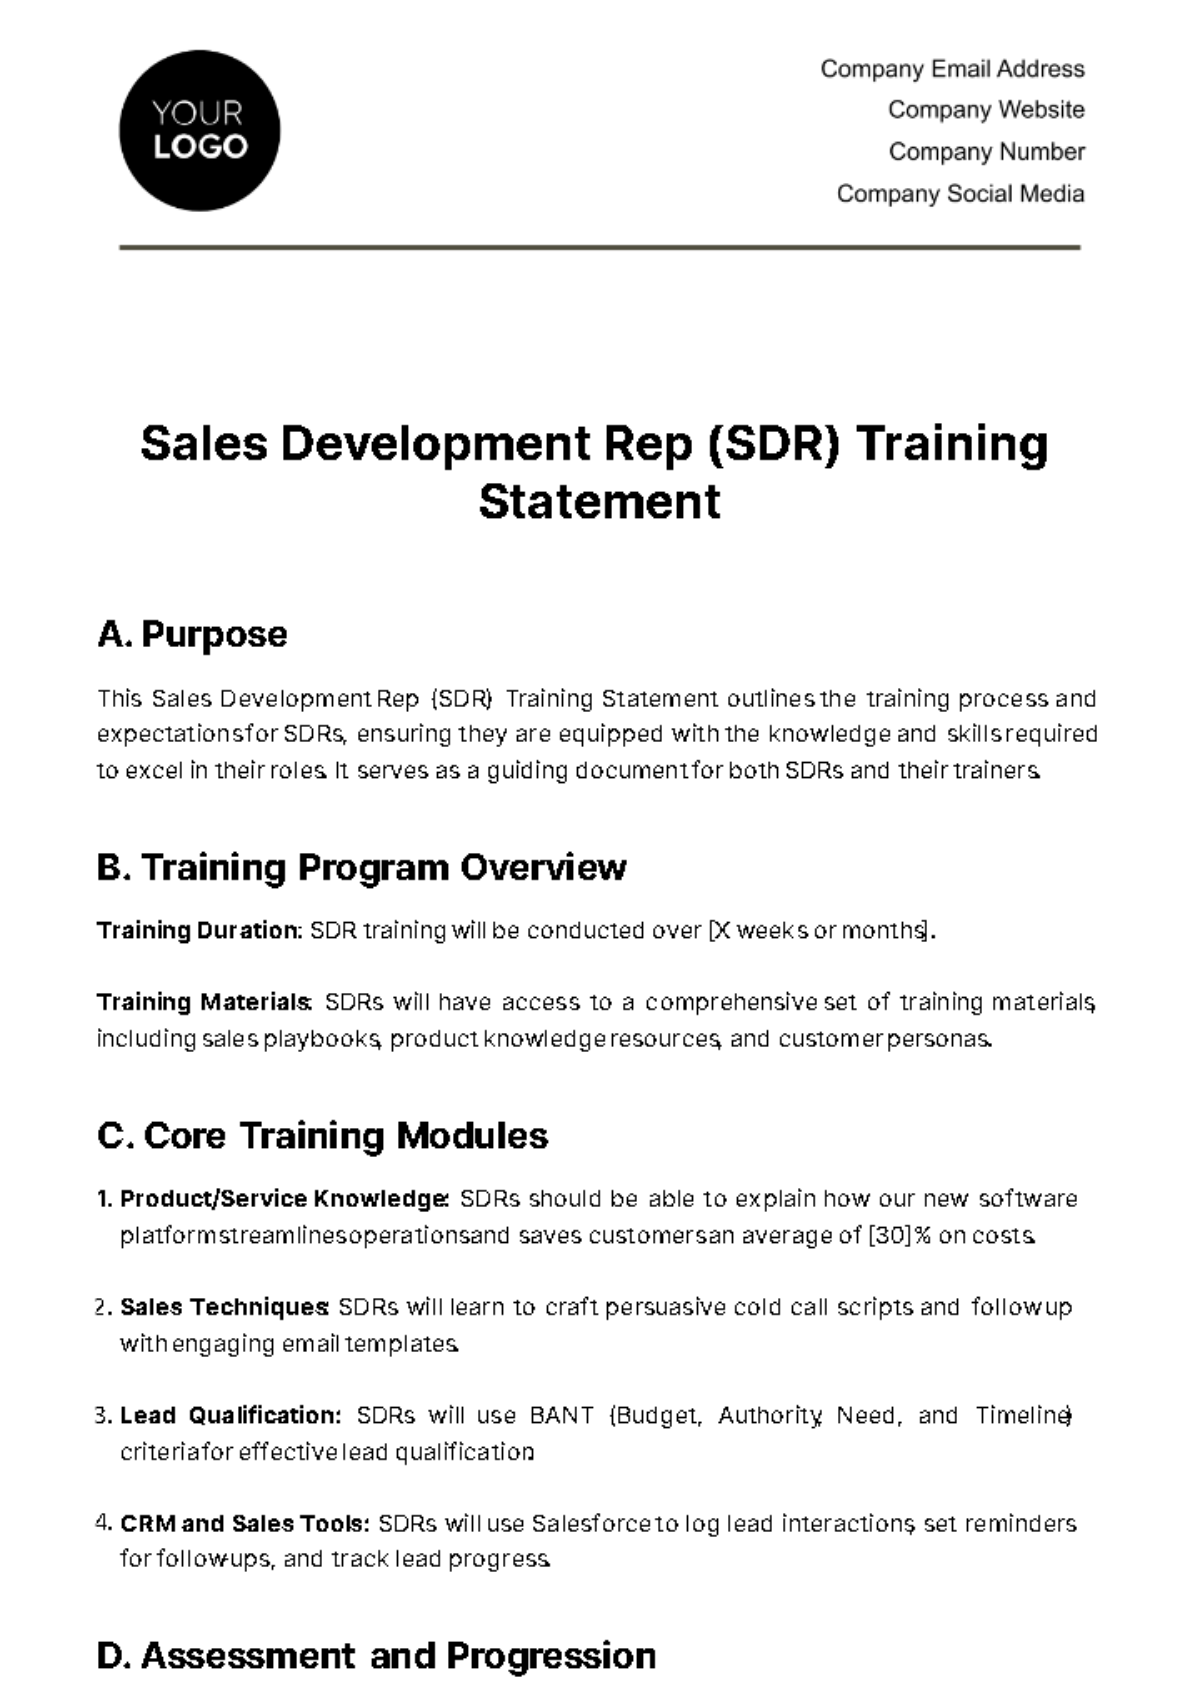 Sales Development Rep (SDR) Training Statement Template